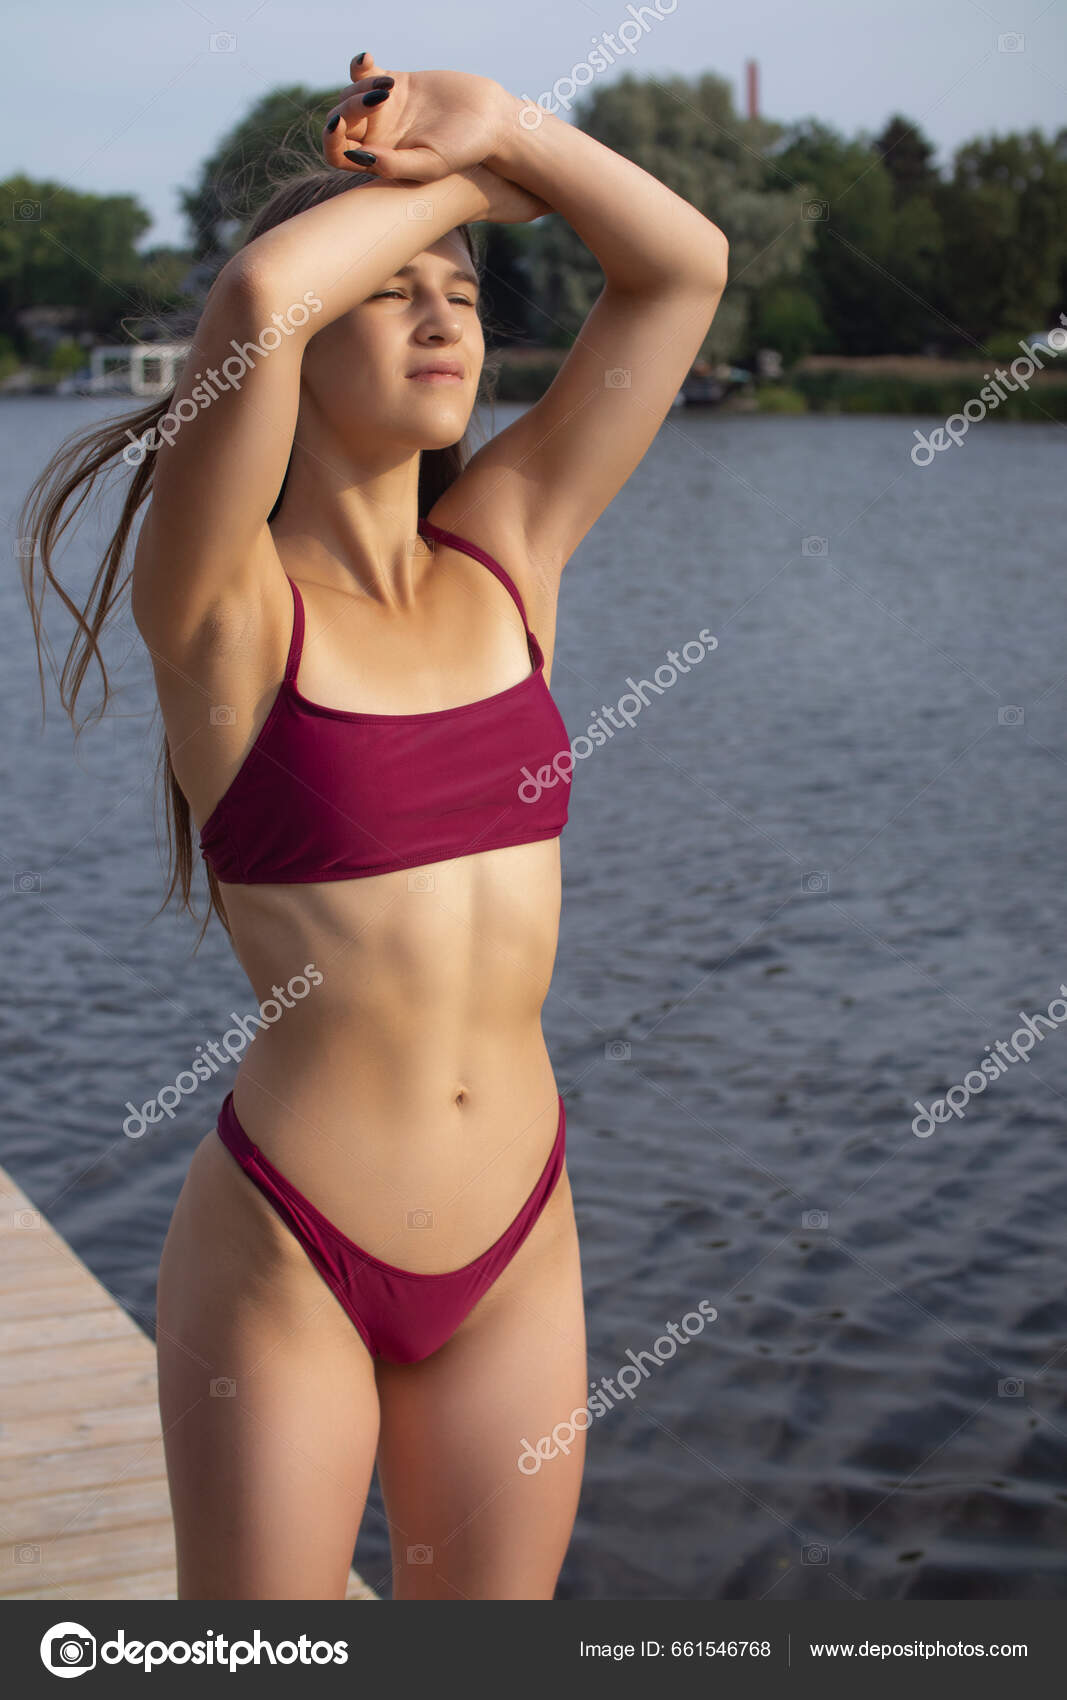 https://st5.depositphotos.com/2970081/66154/i/1600/depositphotos_661546768-stock-photo-young-woman-red-bikini-pool.jpg